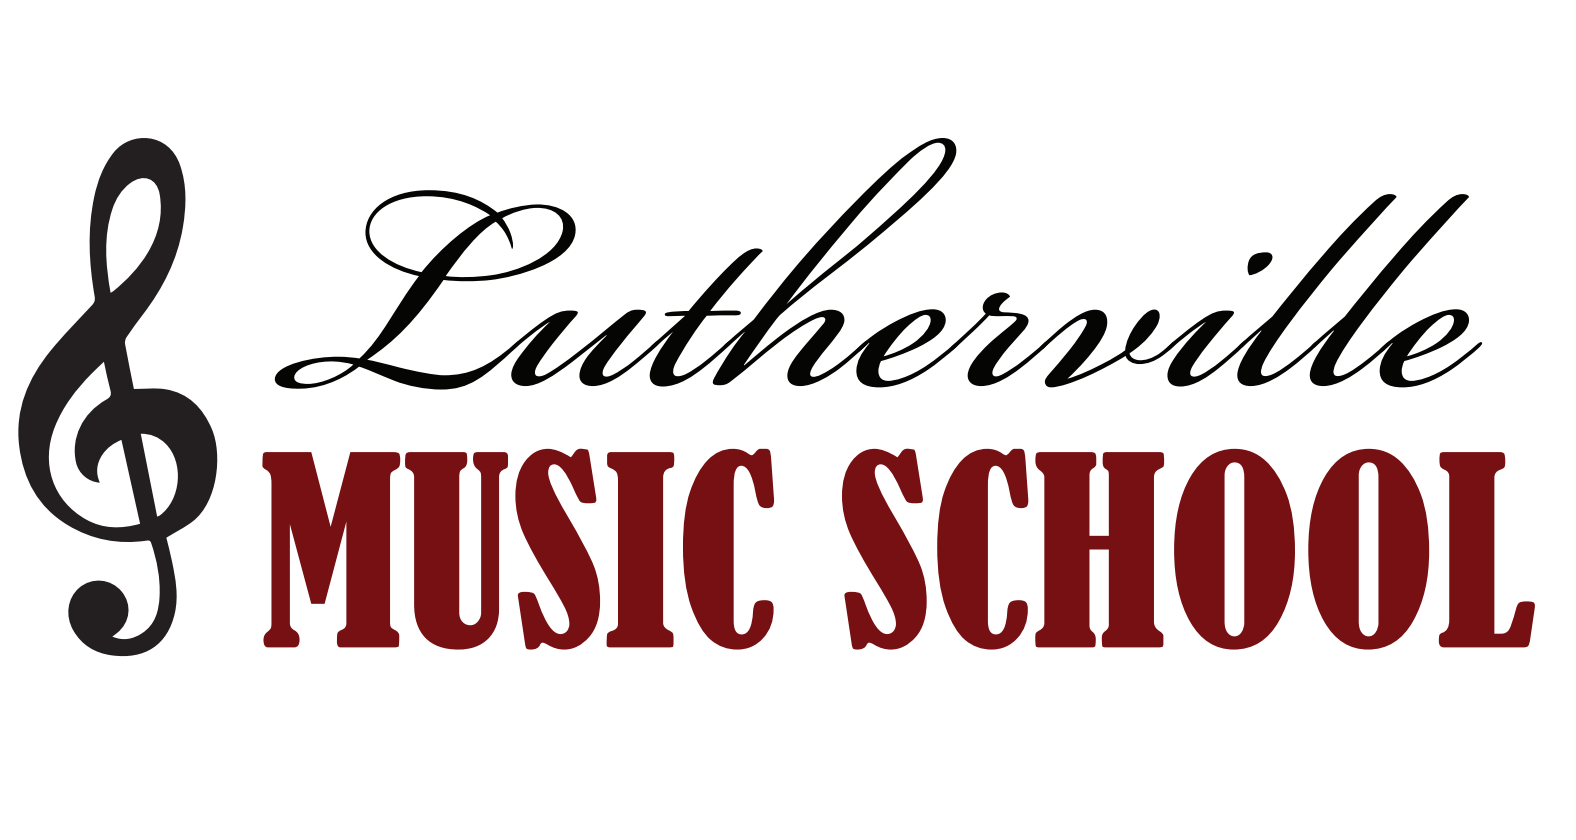 Lutherville Music School logo.